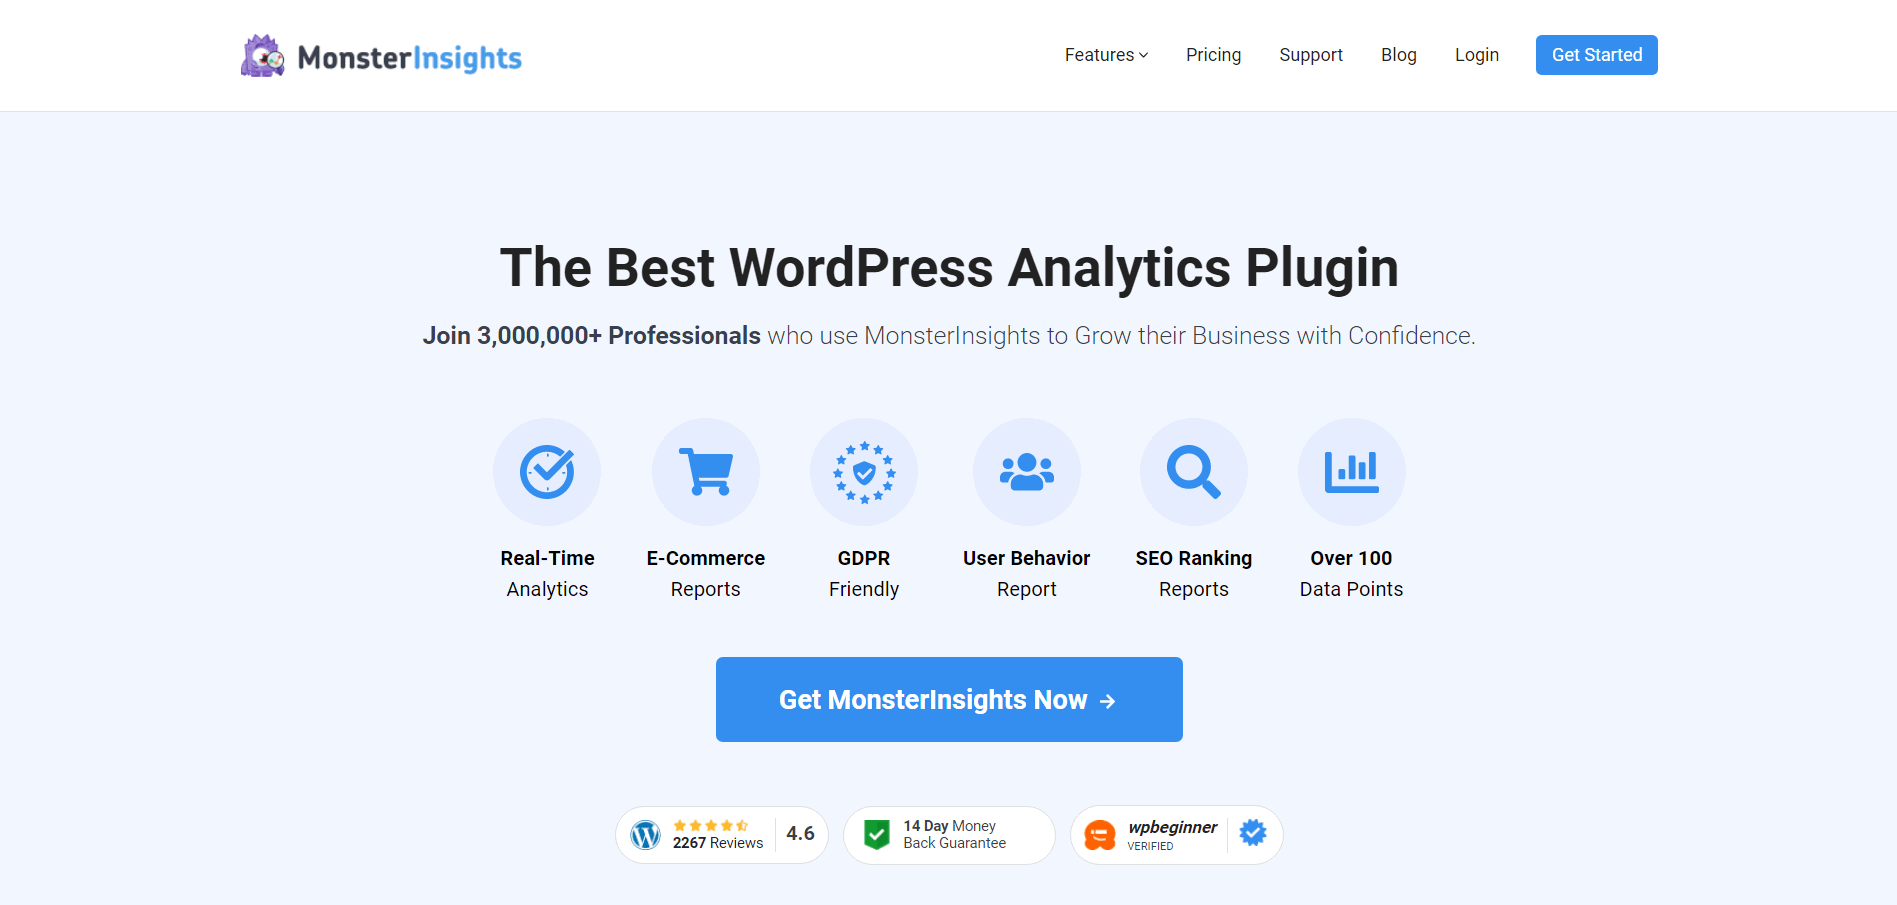 MonsterInsights, the best WordPress analytics plugin